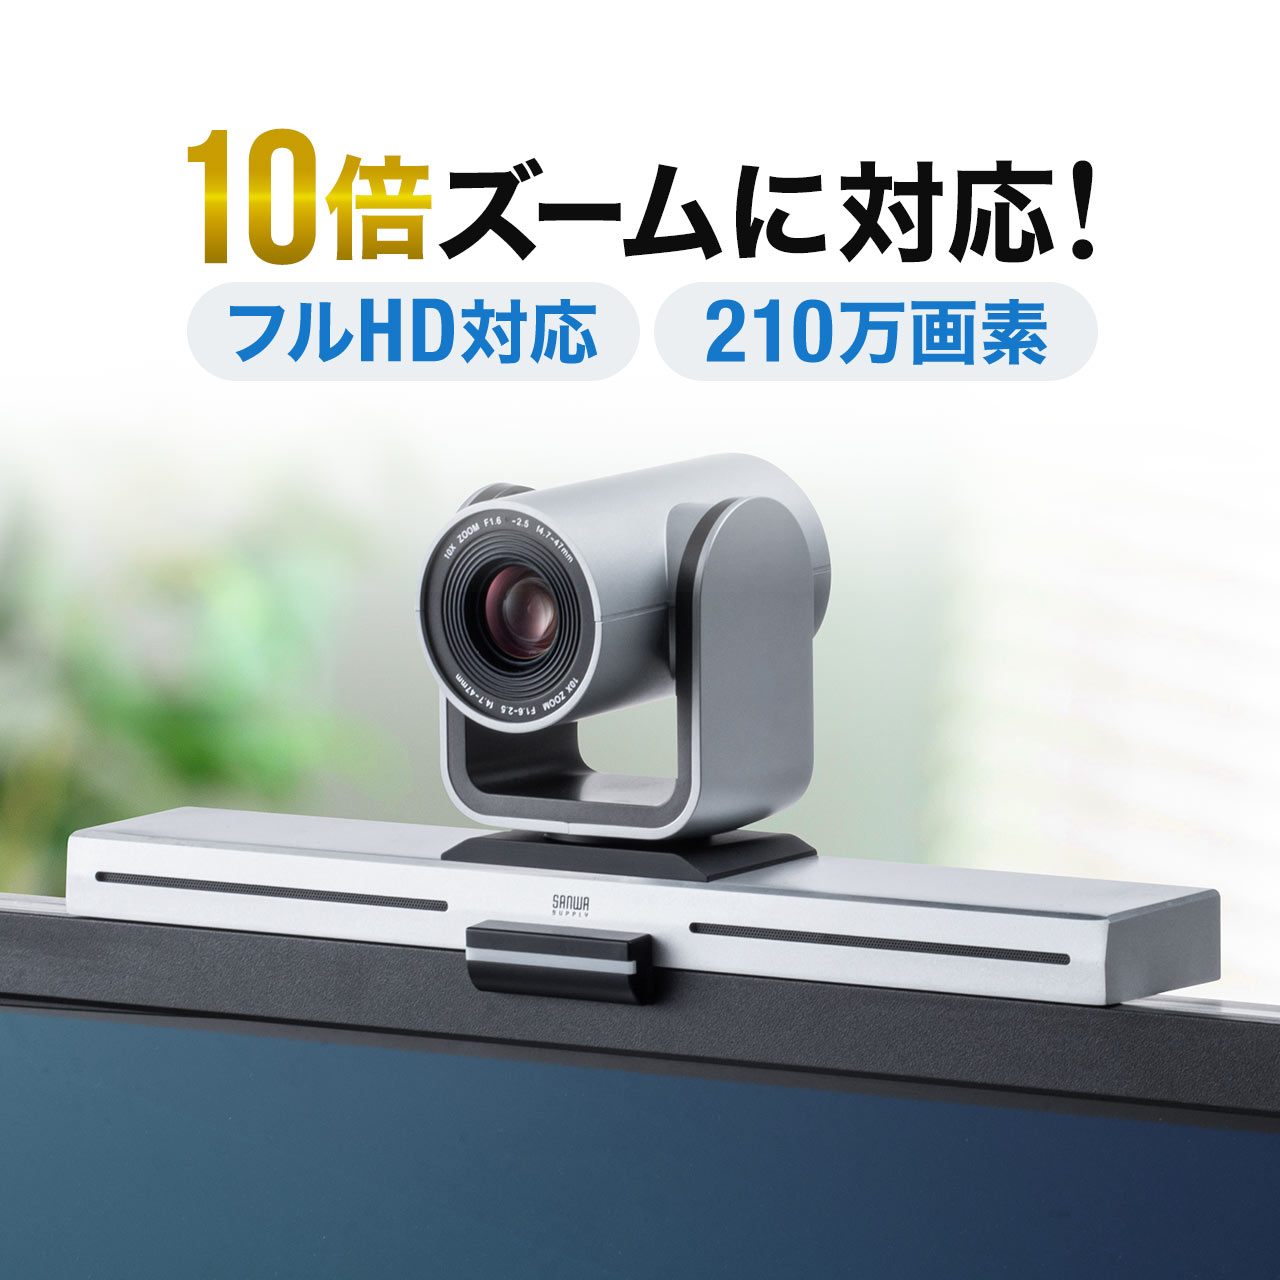 WEBカメラ 広角 USBカメラ 高画質 10倍ズーム対応 WEB会議向け パン チルト対応 フルHD 210万画素 カメラ三脚 Zoom